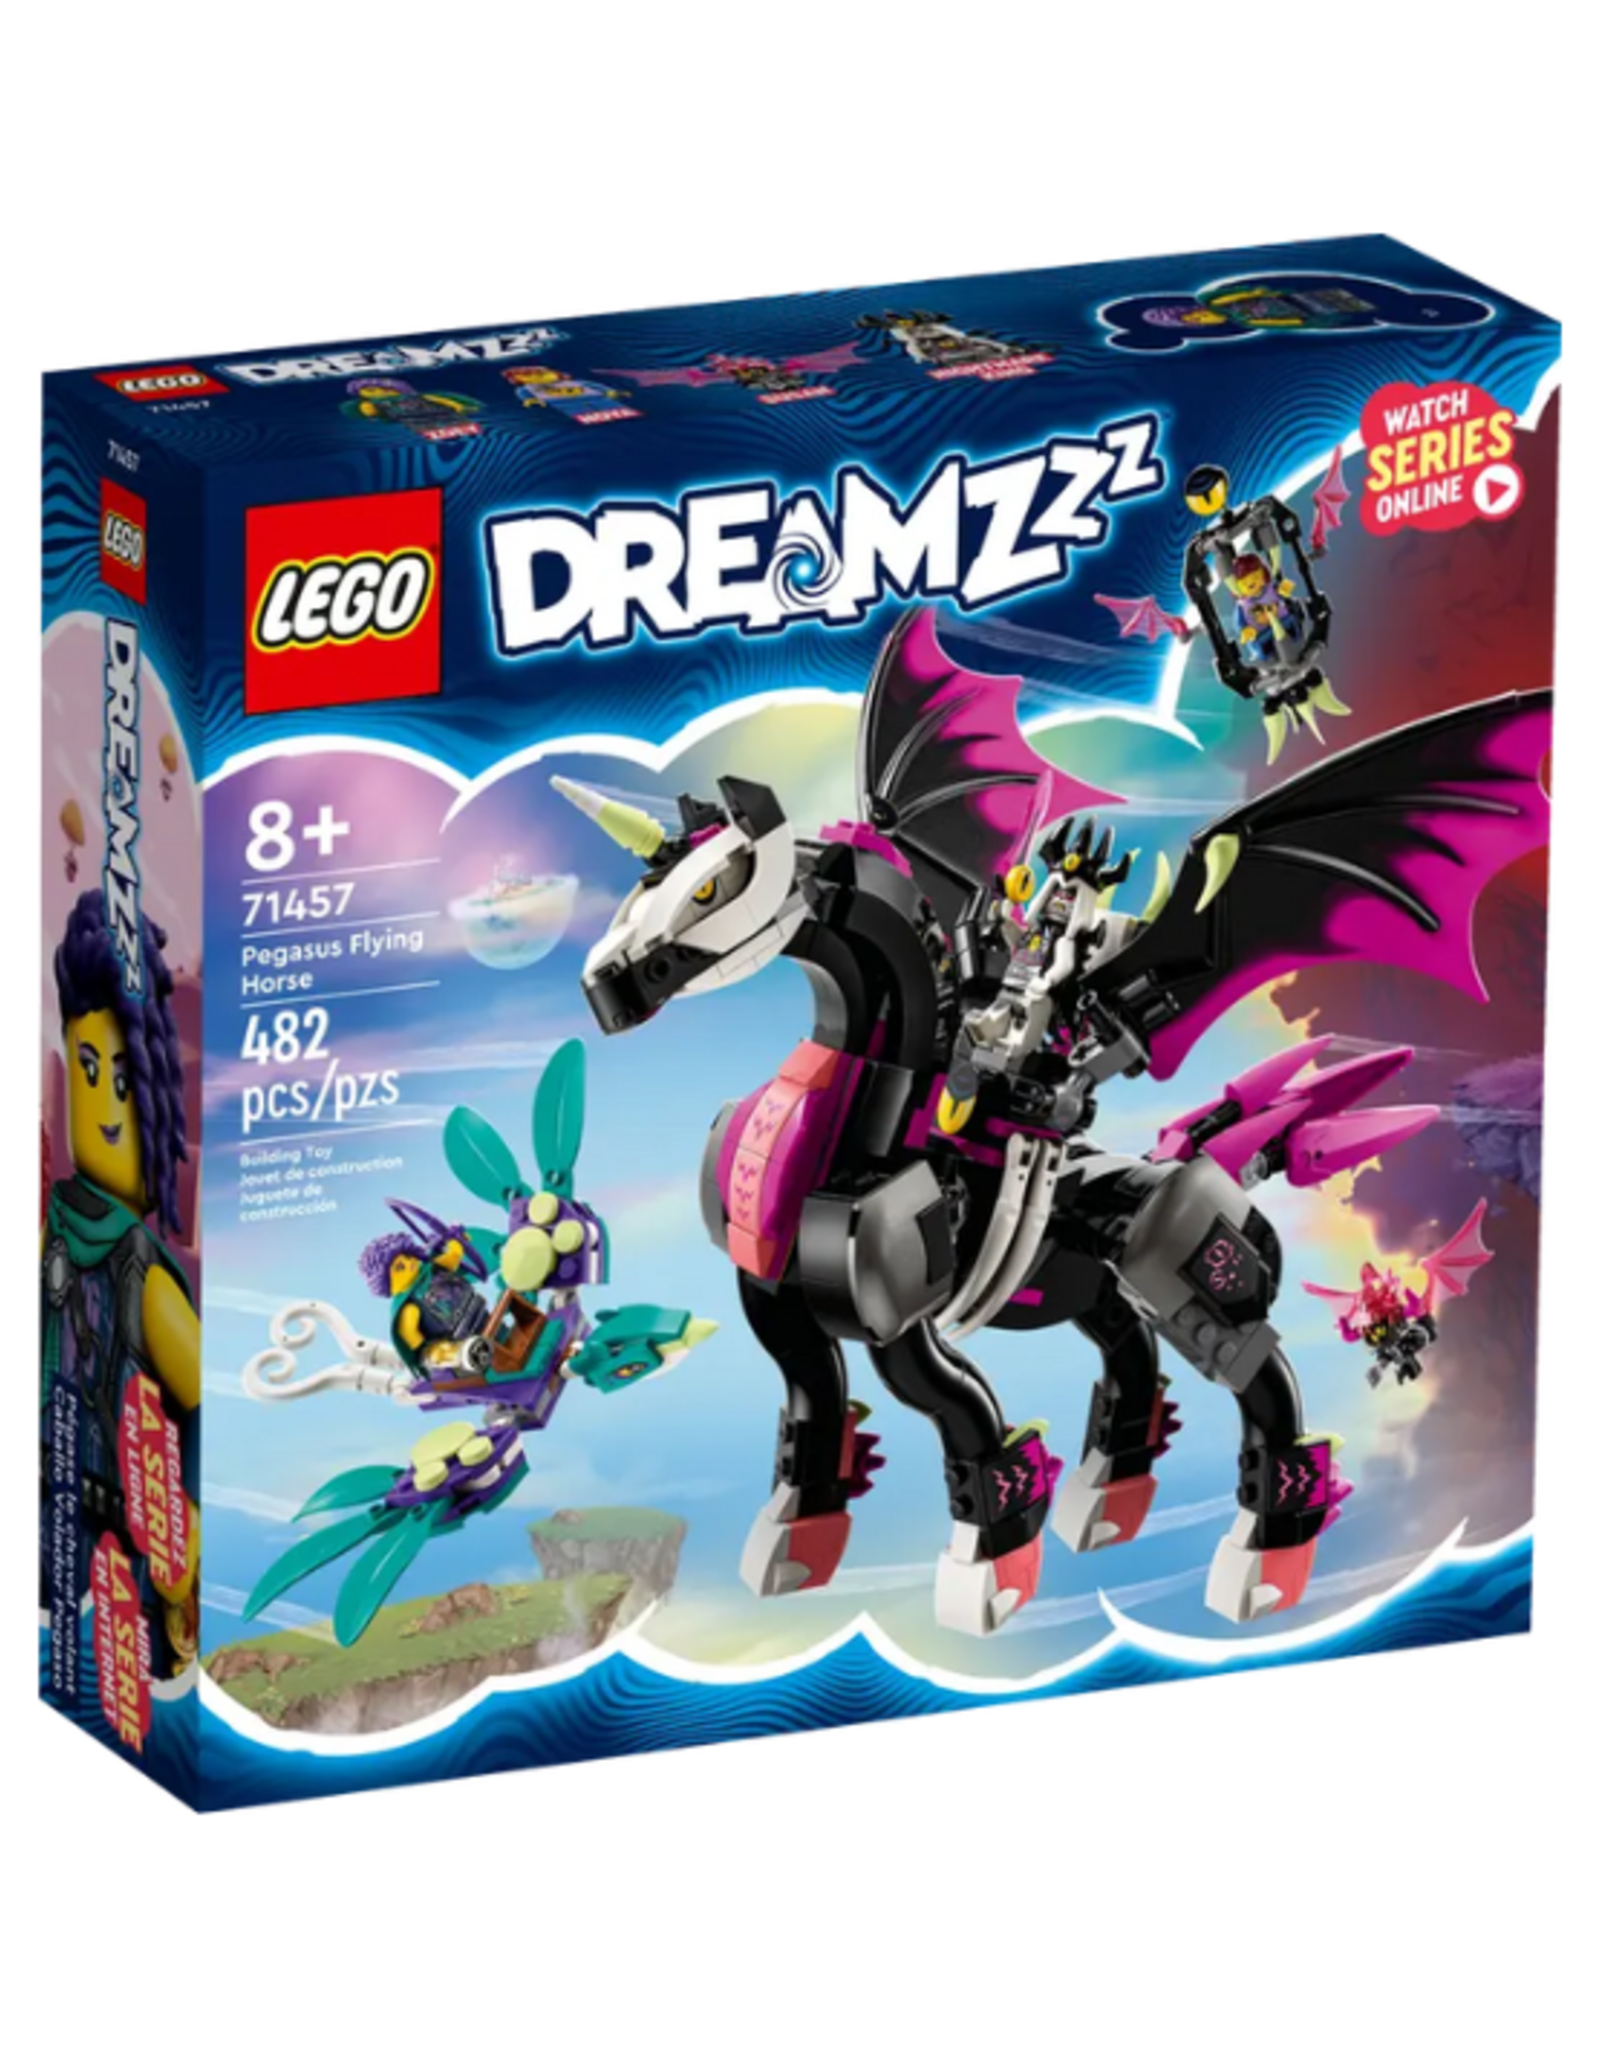 Lego Lego - Dreamzzz - 71457 - Pegasus Flying Horse